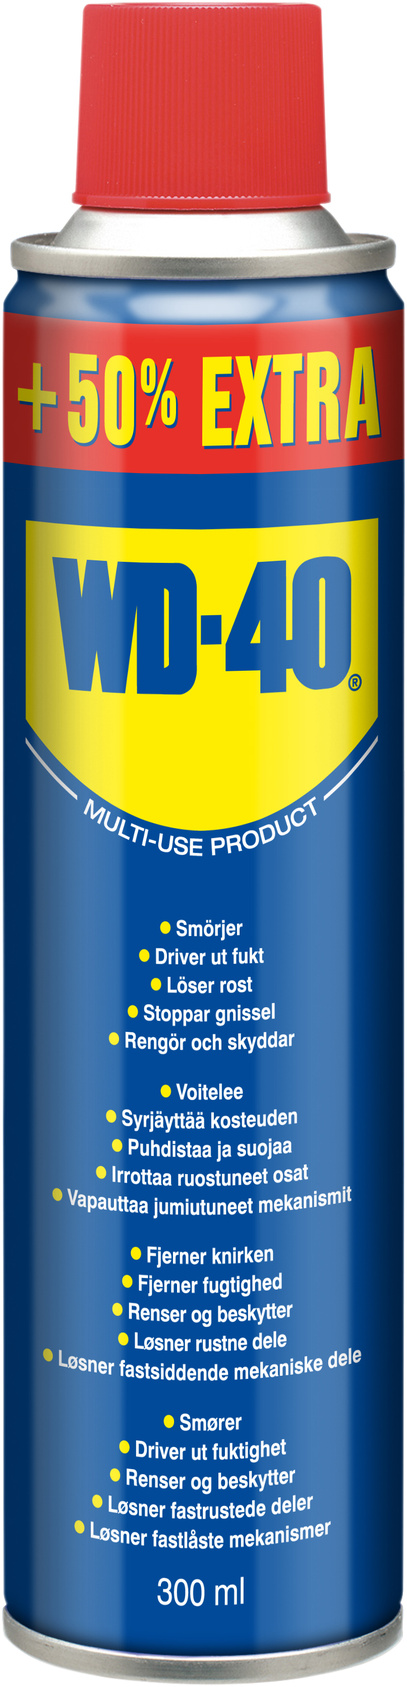 Universalspray WD-40, 300 ml 50% extra